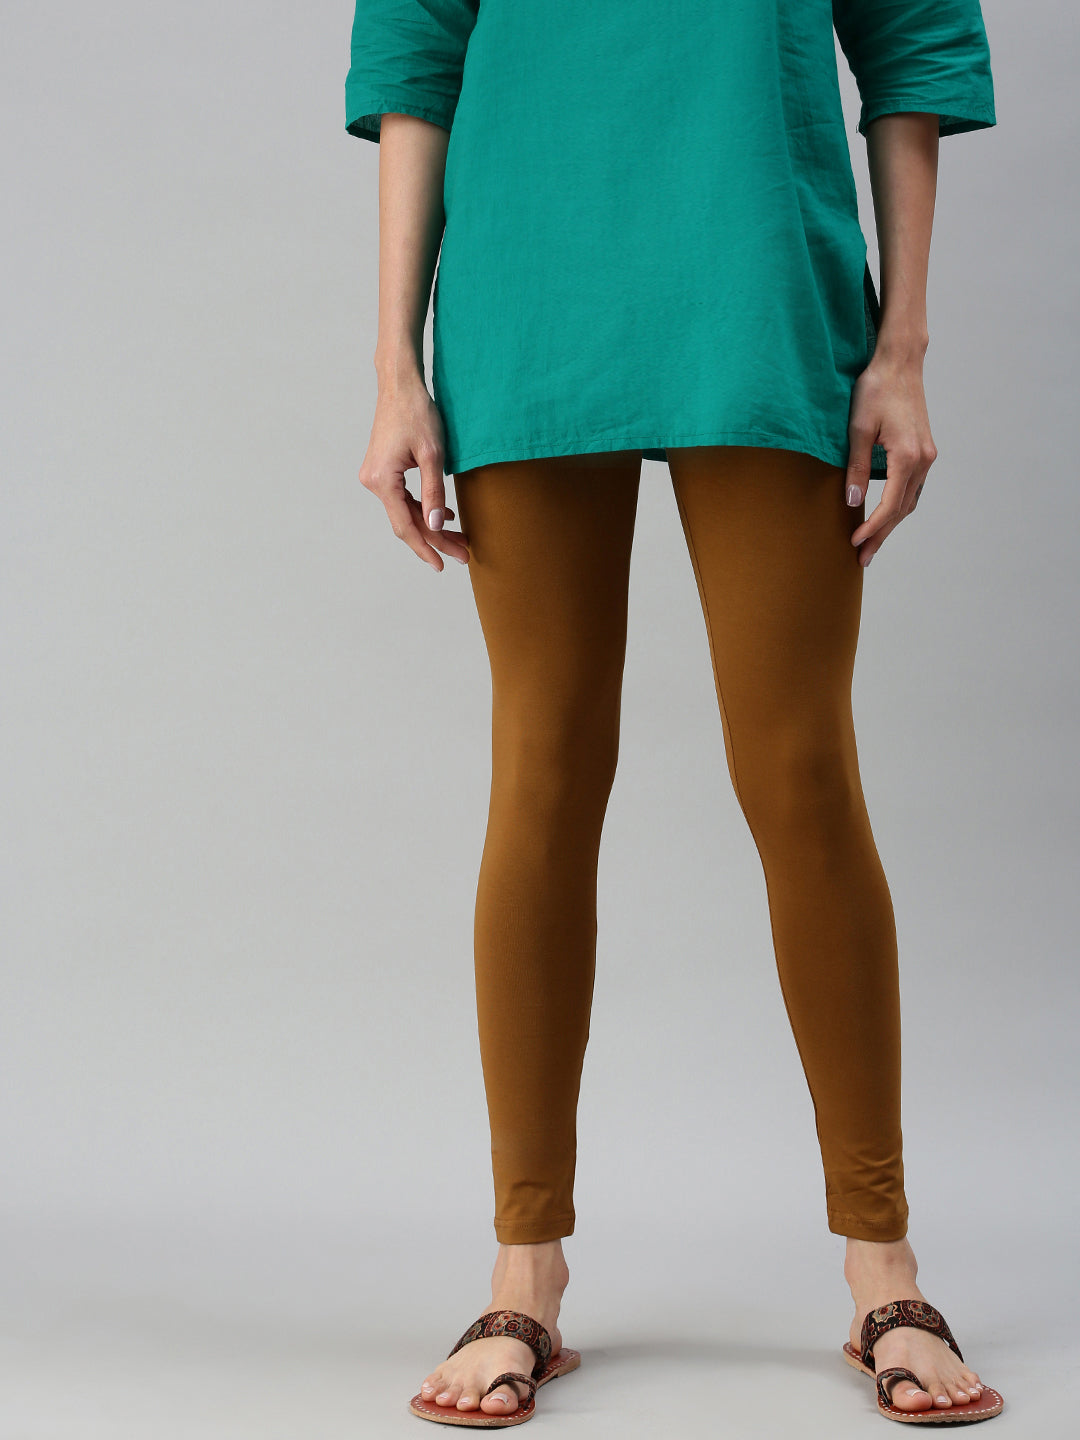 Buy De Moza Women Light Green Cotton Ankle Length Leggings - XXXL